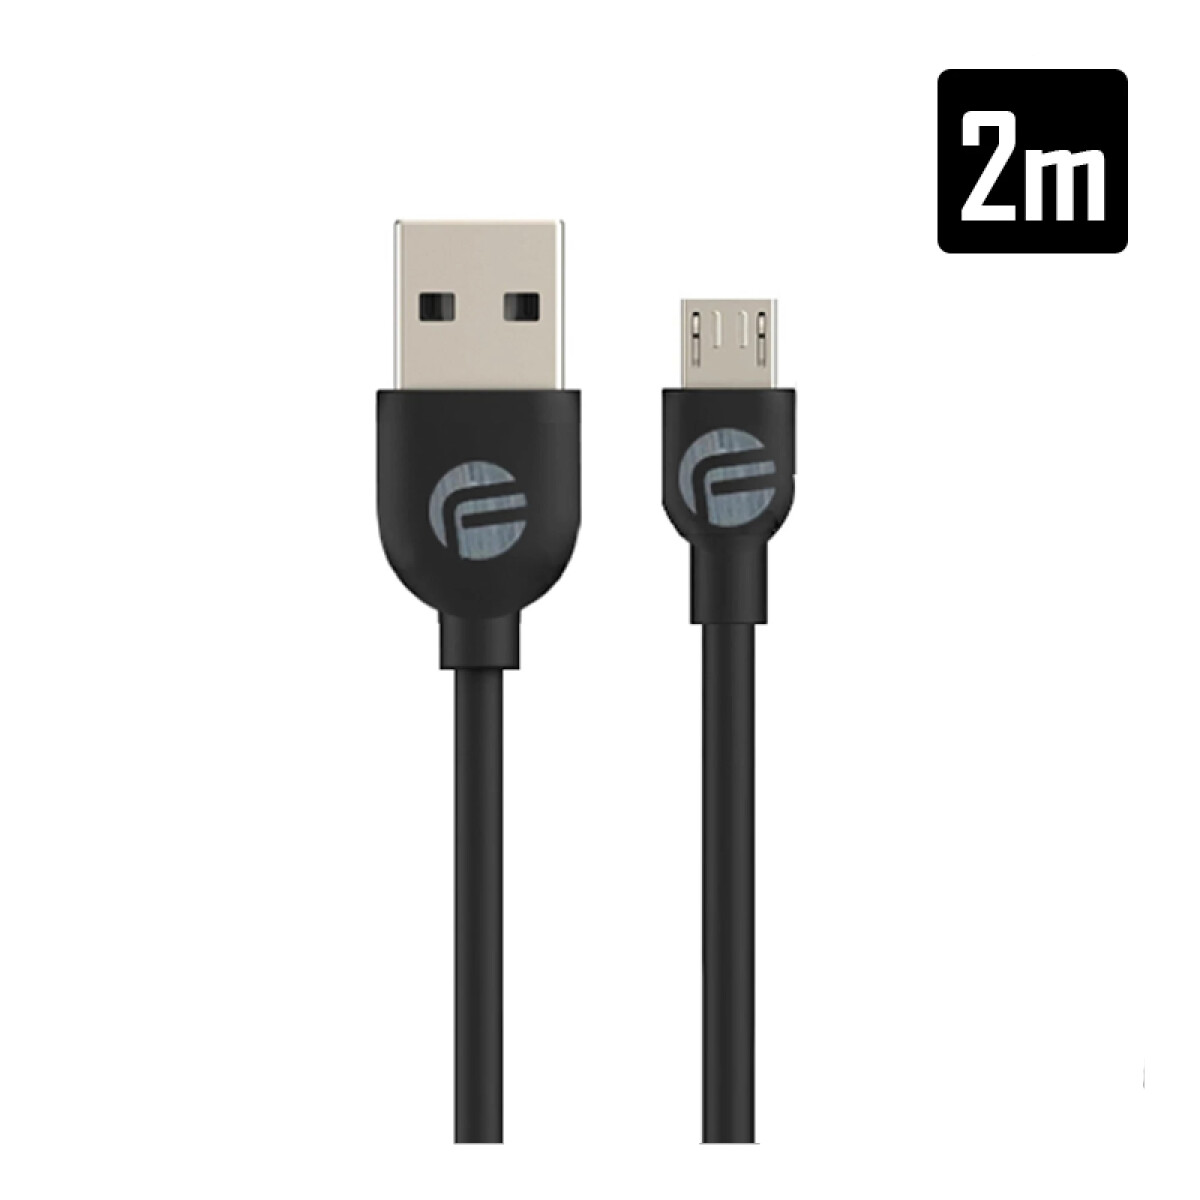 Cable Micro USB 7 FT chato FIFO60417 - Unica 